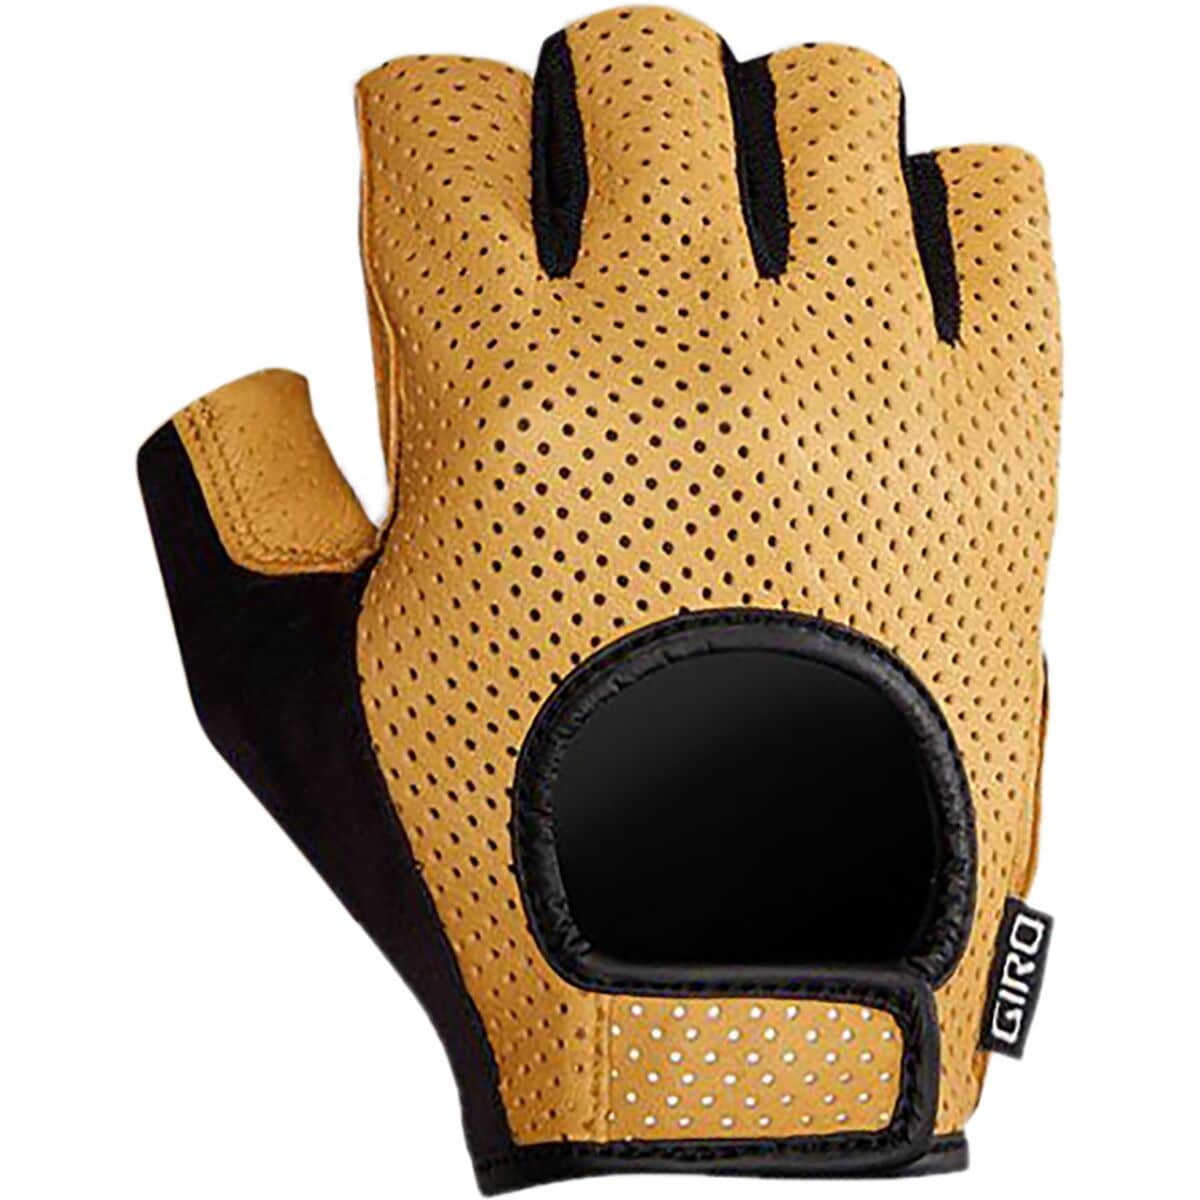 Giro LX Glove - Men's